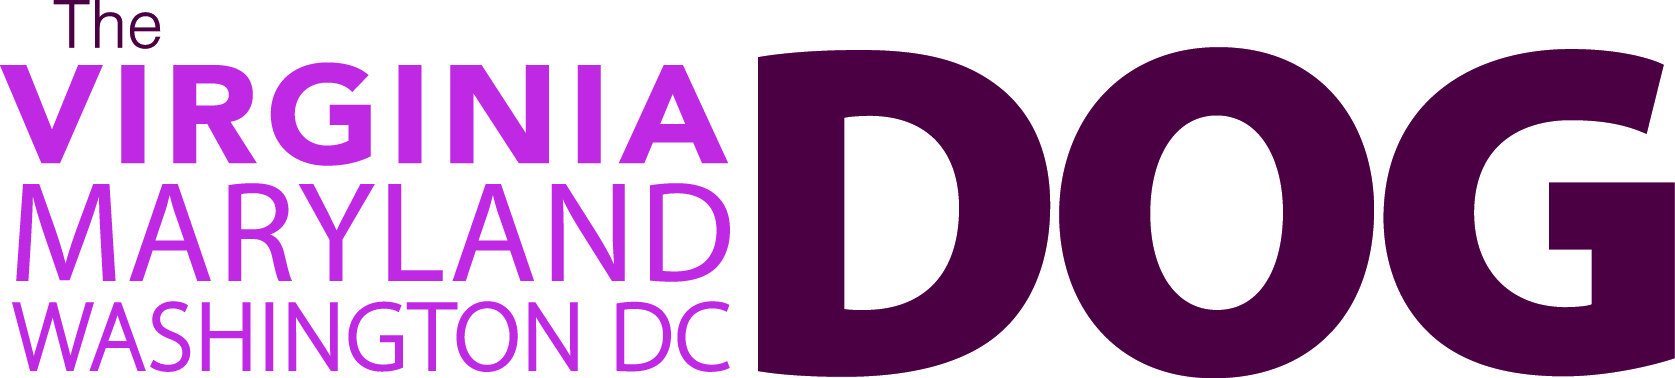 VAMDDog logo 2015 maroon